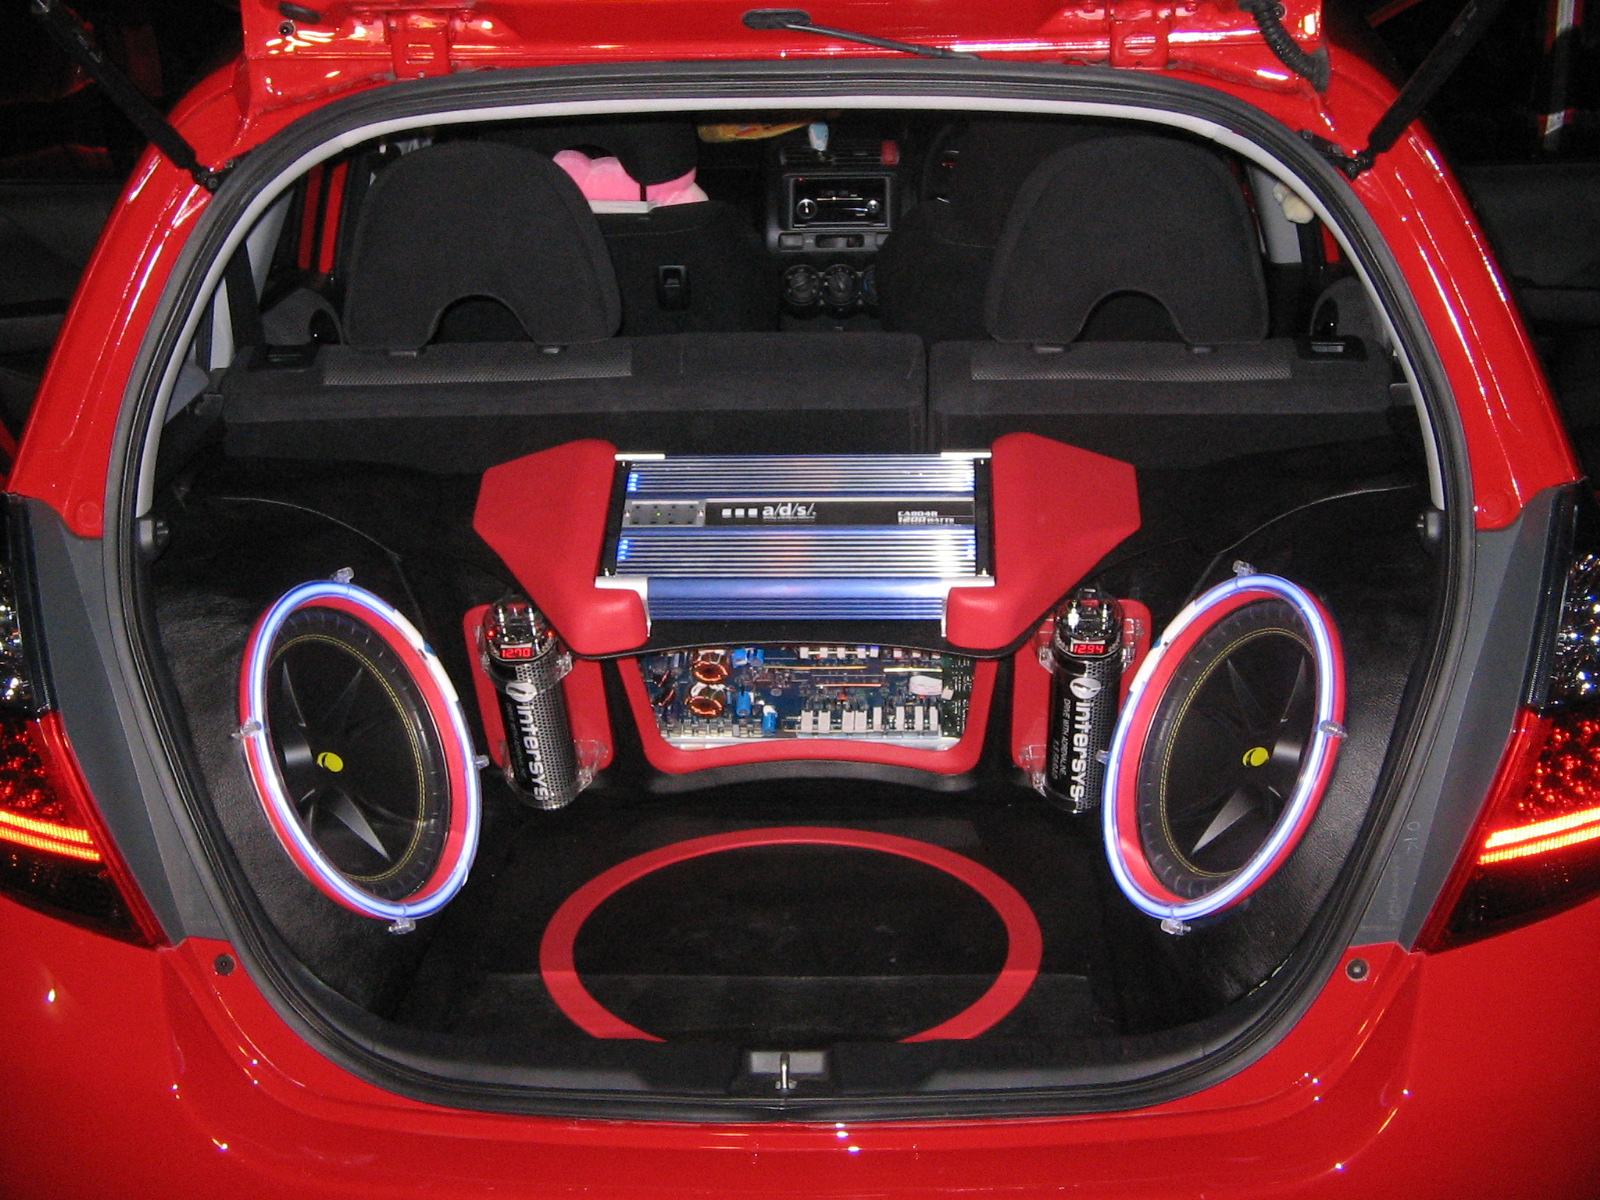 Seven Audio Car Audio Division Blora Infobloracom